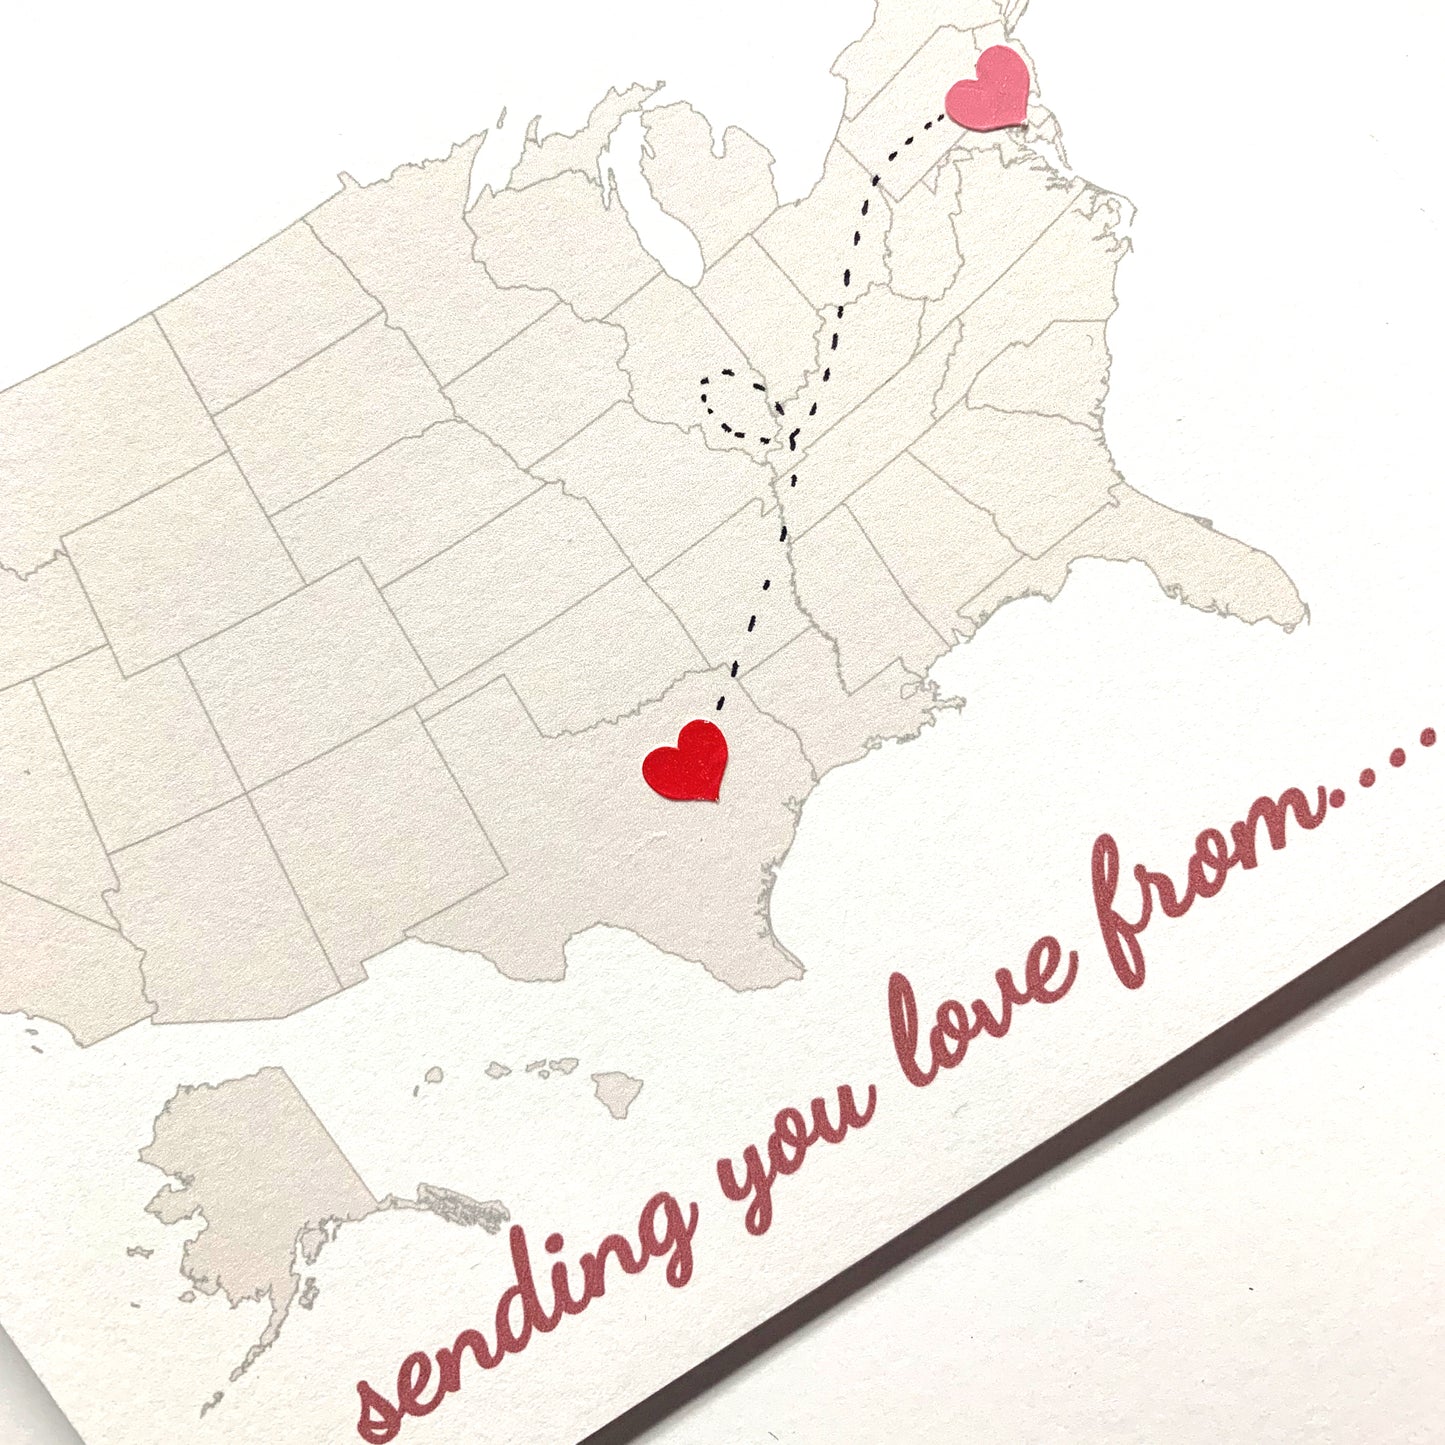 DIY Sending Love Heart Long Distance Greeting Card